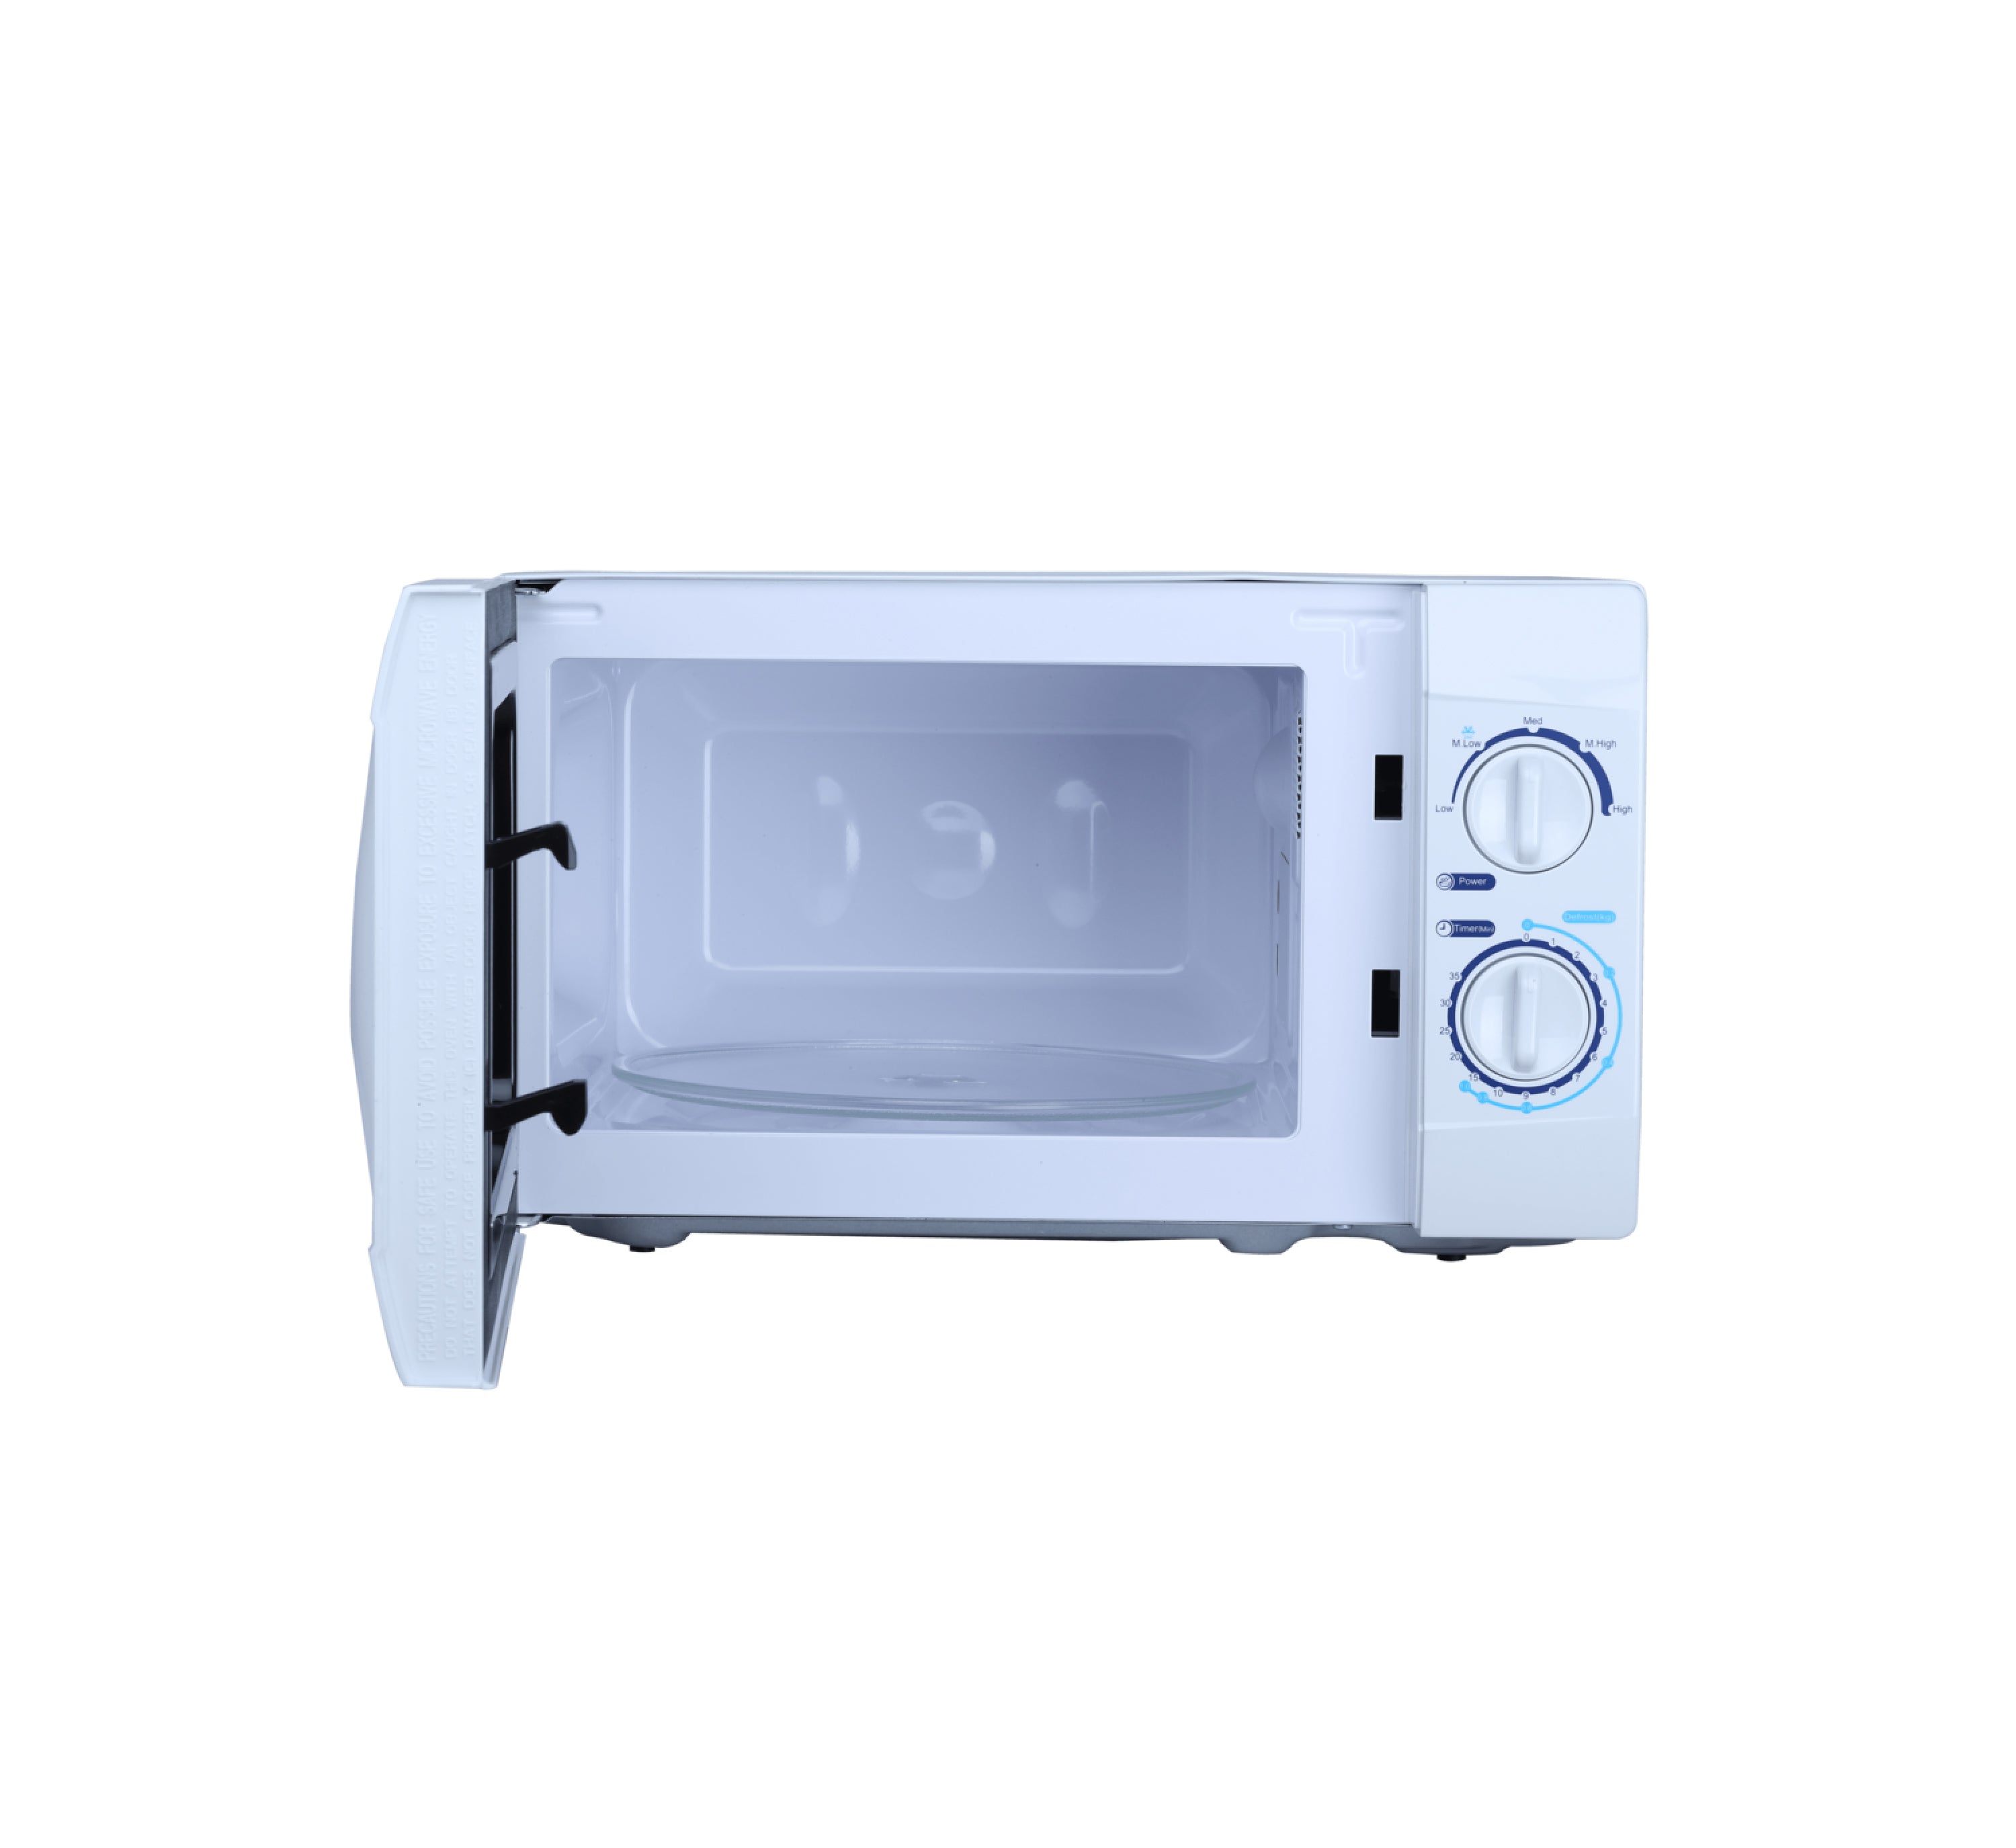 DAWLANCE MD-15 - Heating Microwave Oven